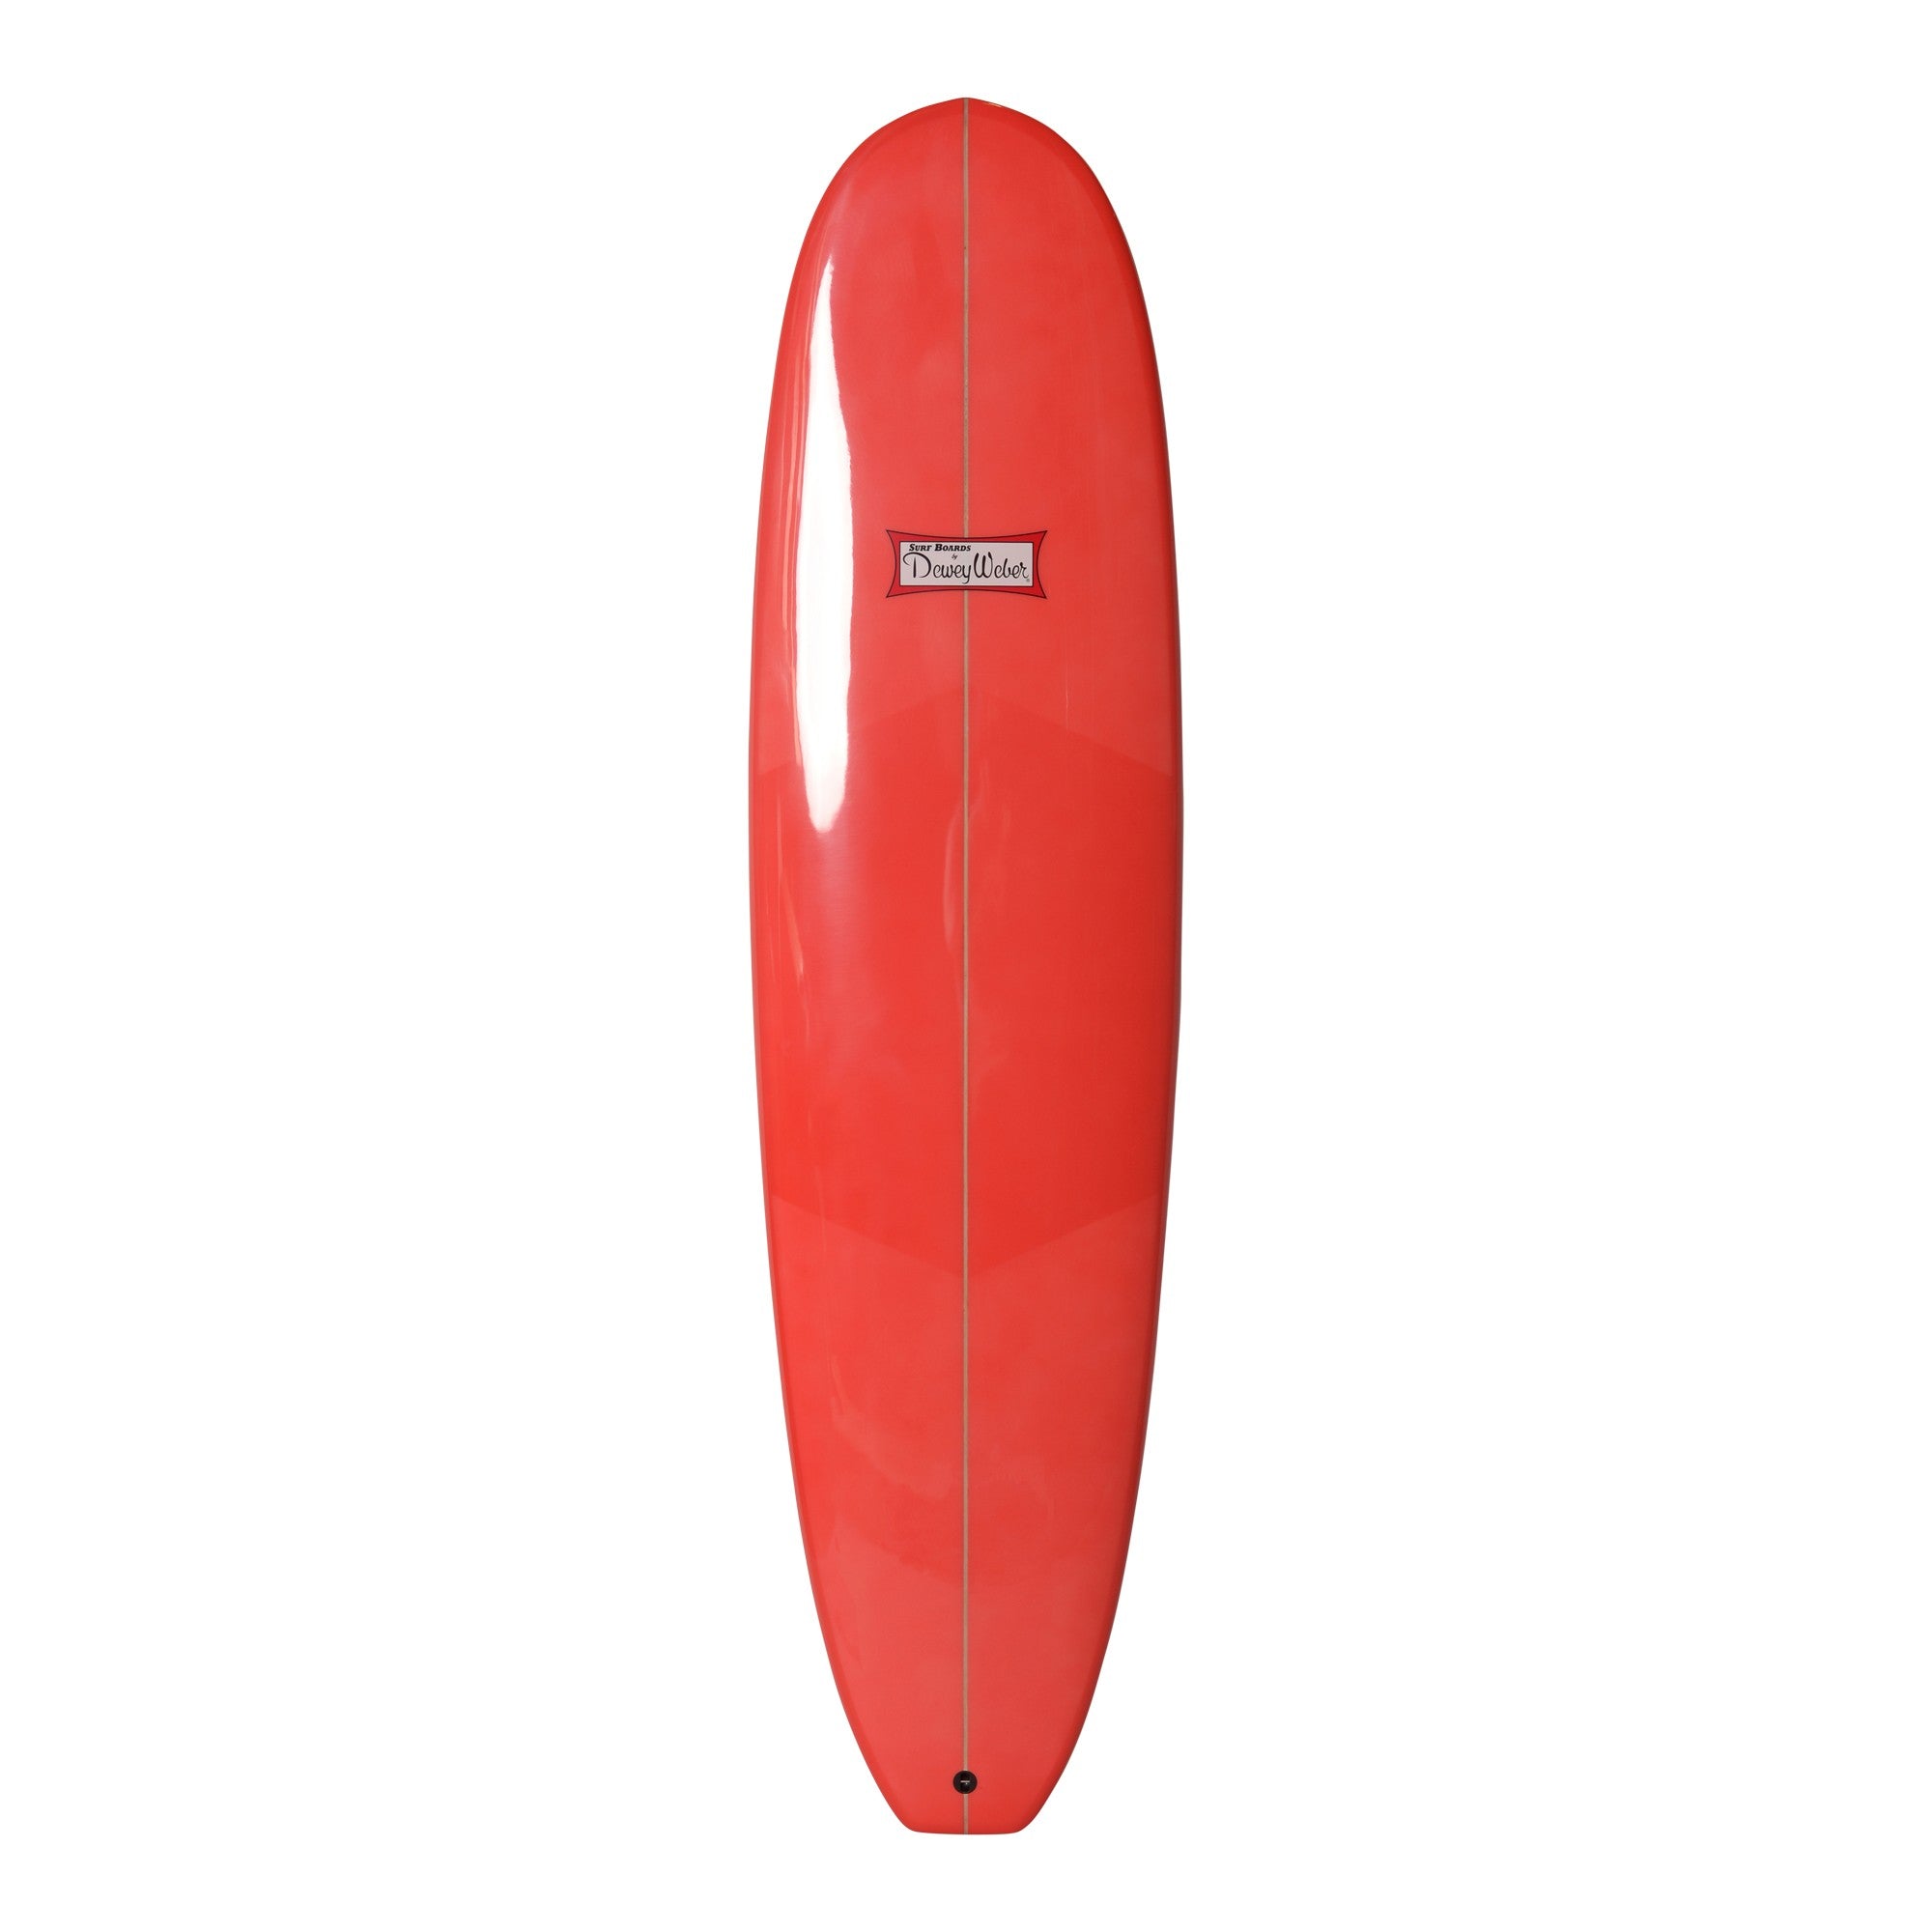 WEBER SURFBOARDS - Quantum 8'2 - Red